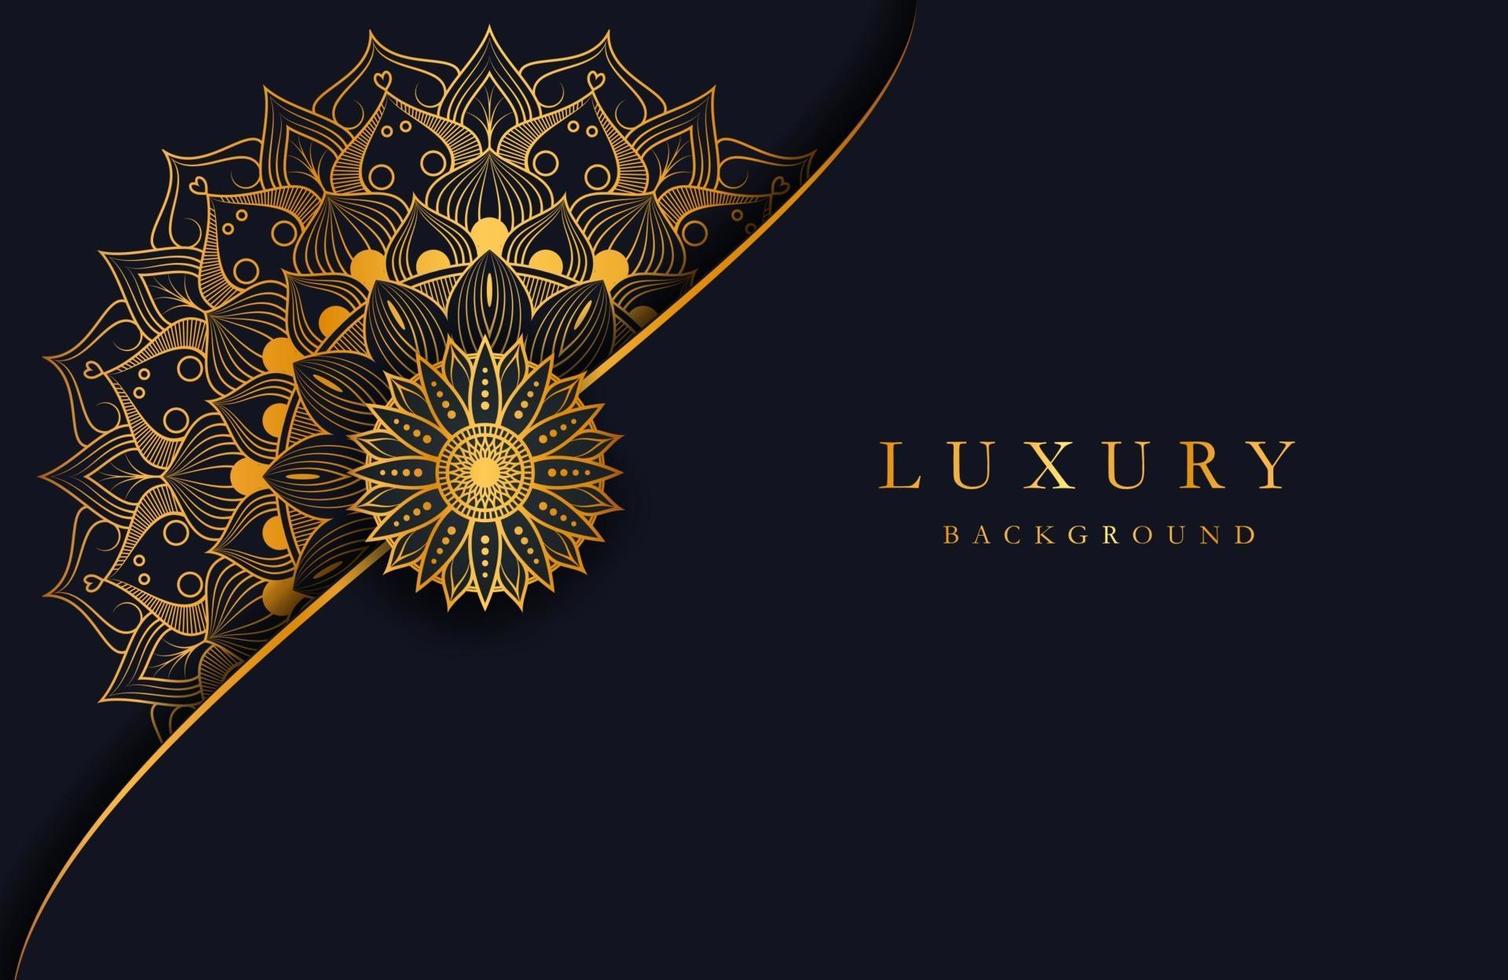 Fondo de lujo con adorno de mandala islámico dorado sobre superficie oscura vector